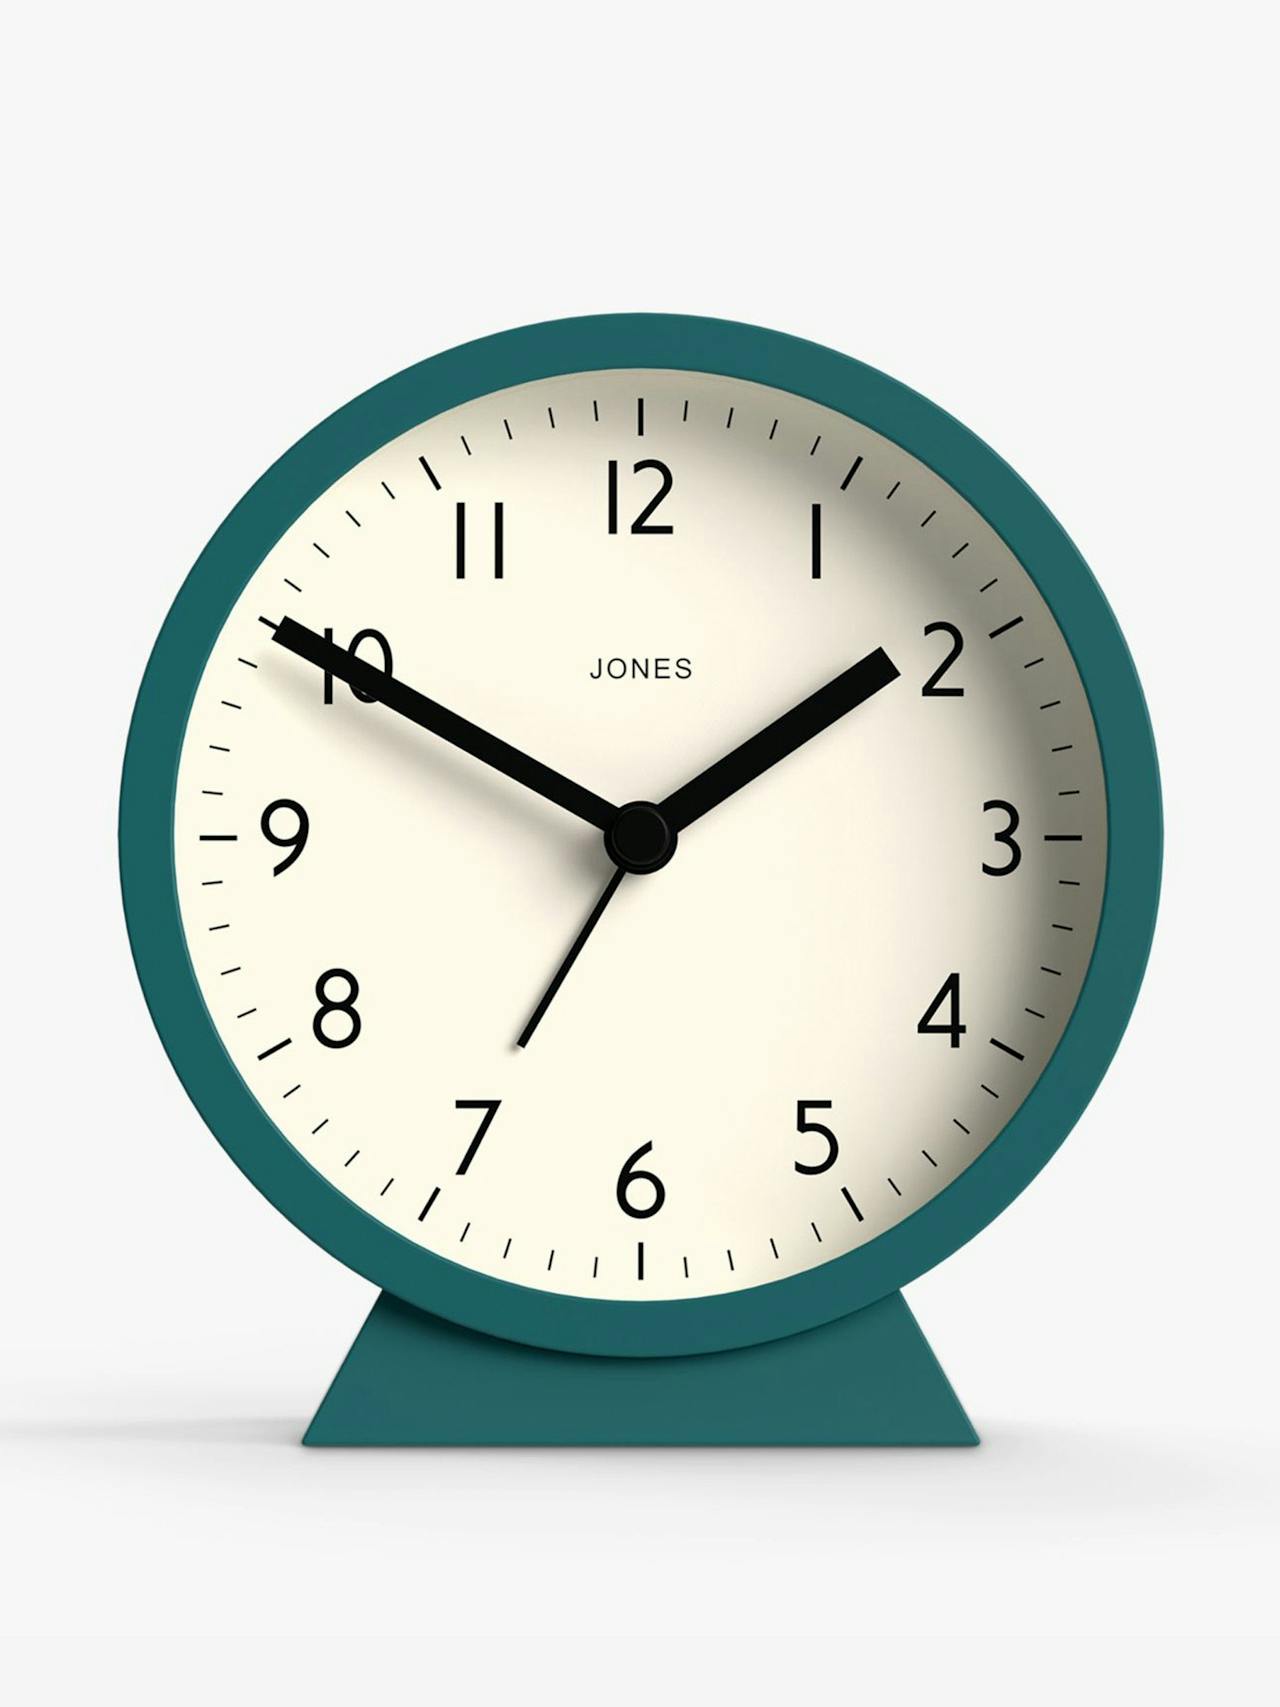 Daybreak quartz analogue alarm clock